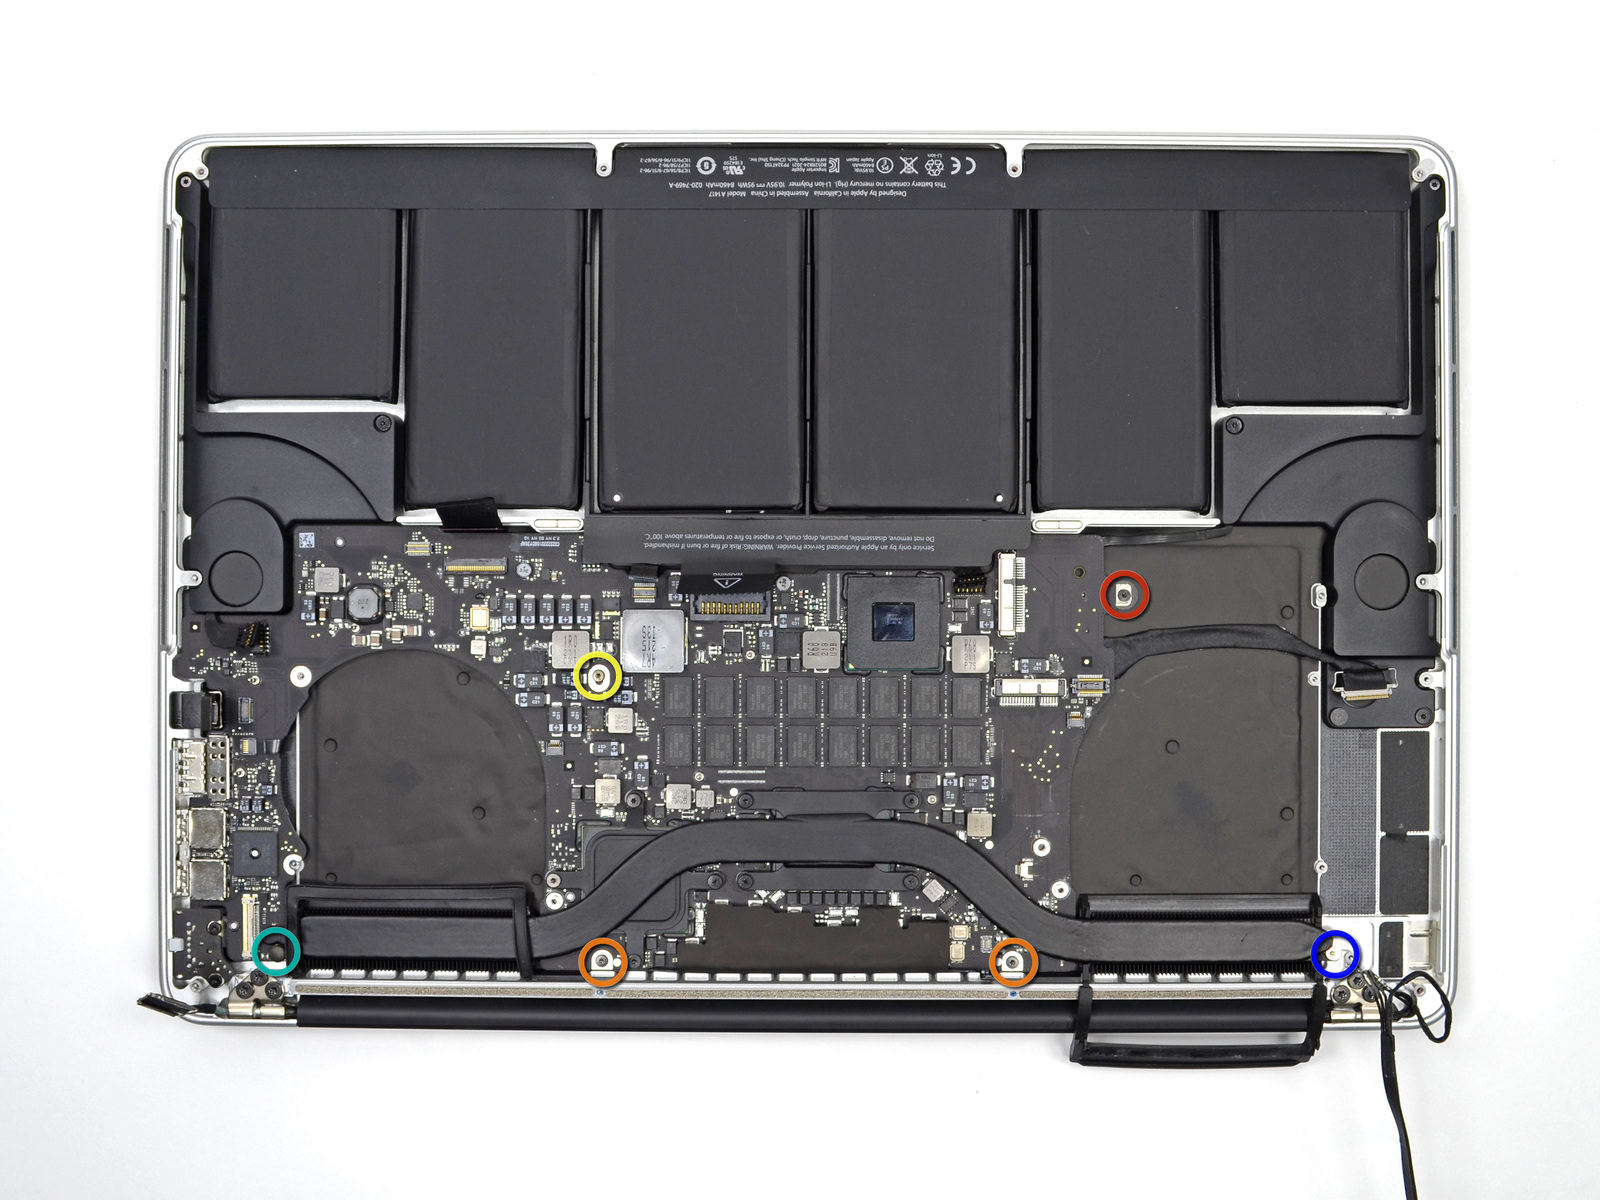 Macbook pro retina display 15 inch late 2013 battery preparing for shipment apple macbook pro